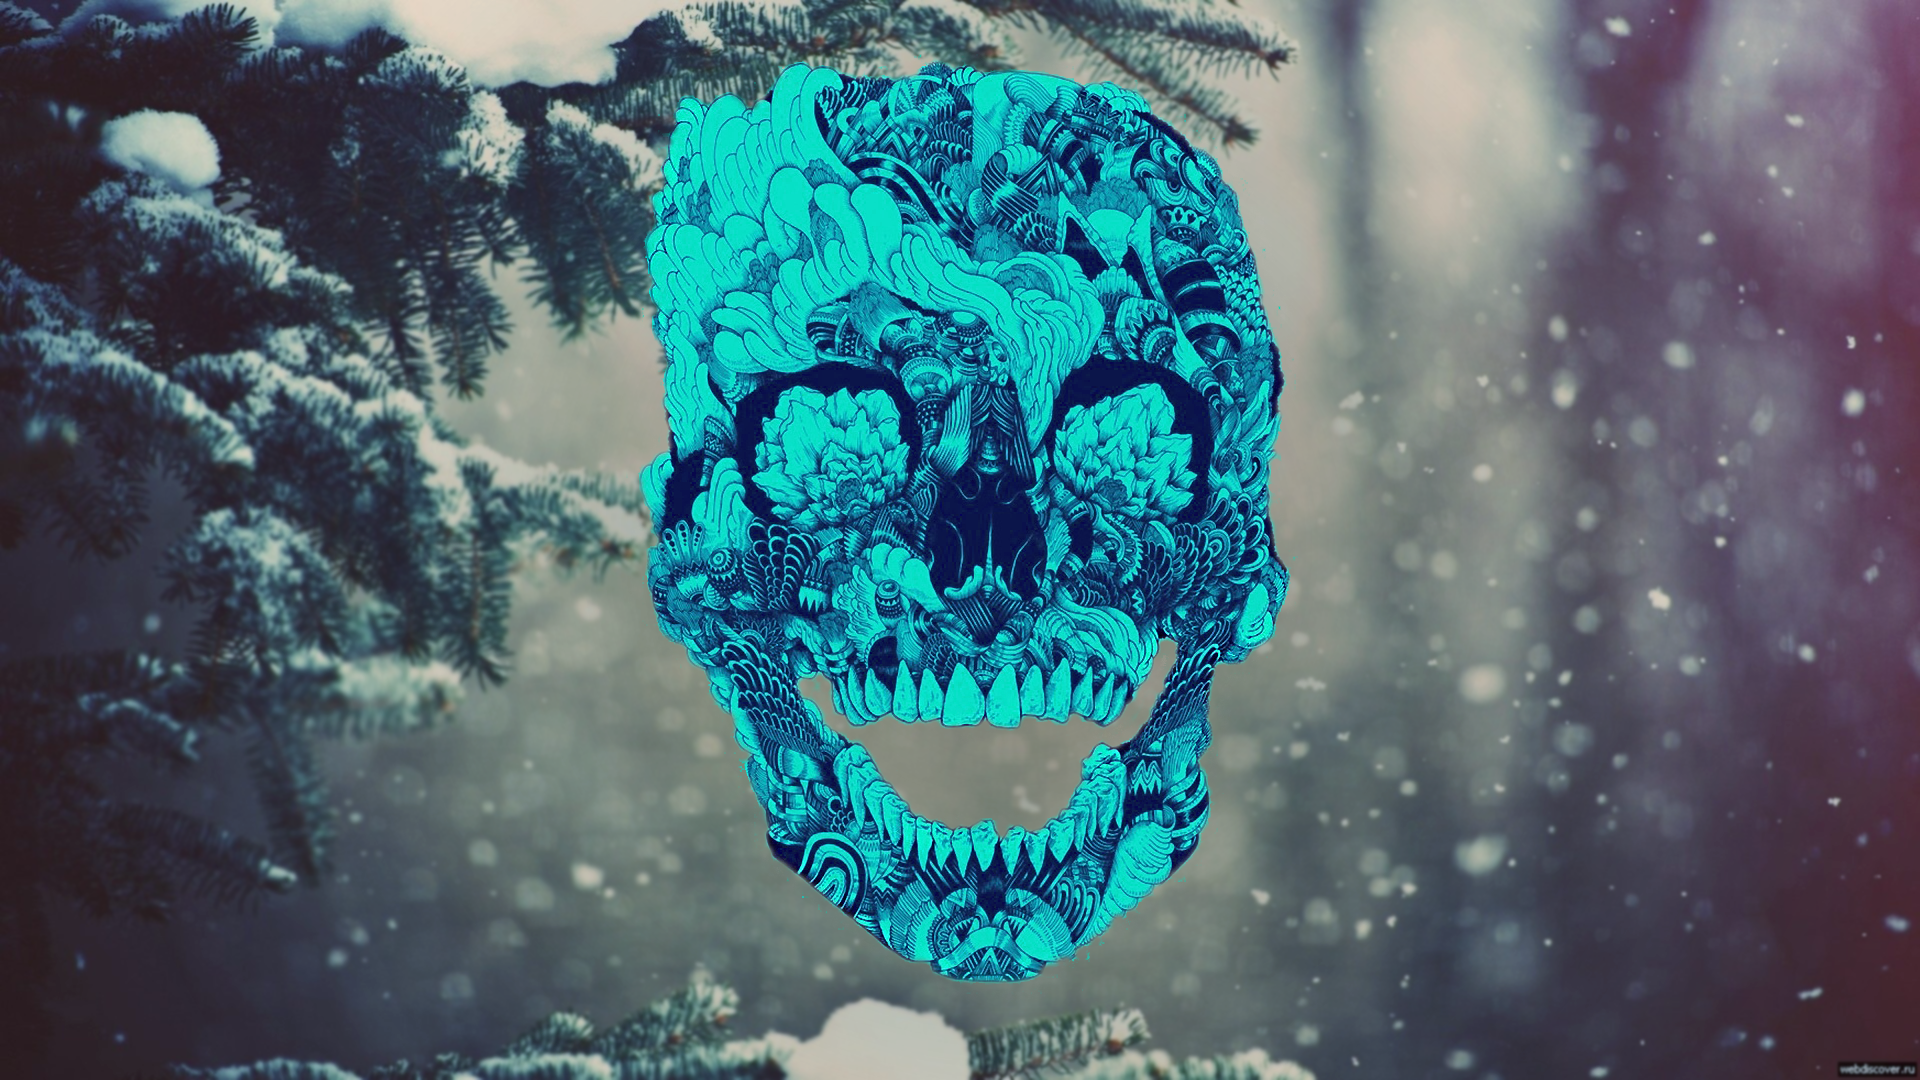 General 1920x1080 skull forest digital art winter snow cyan turquoise snowing